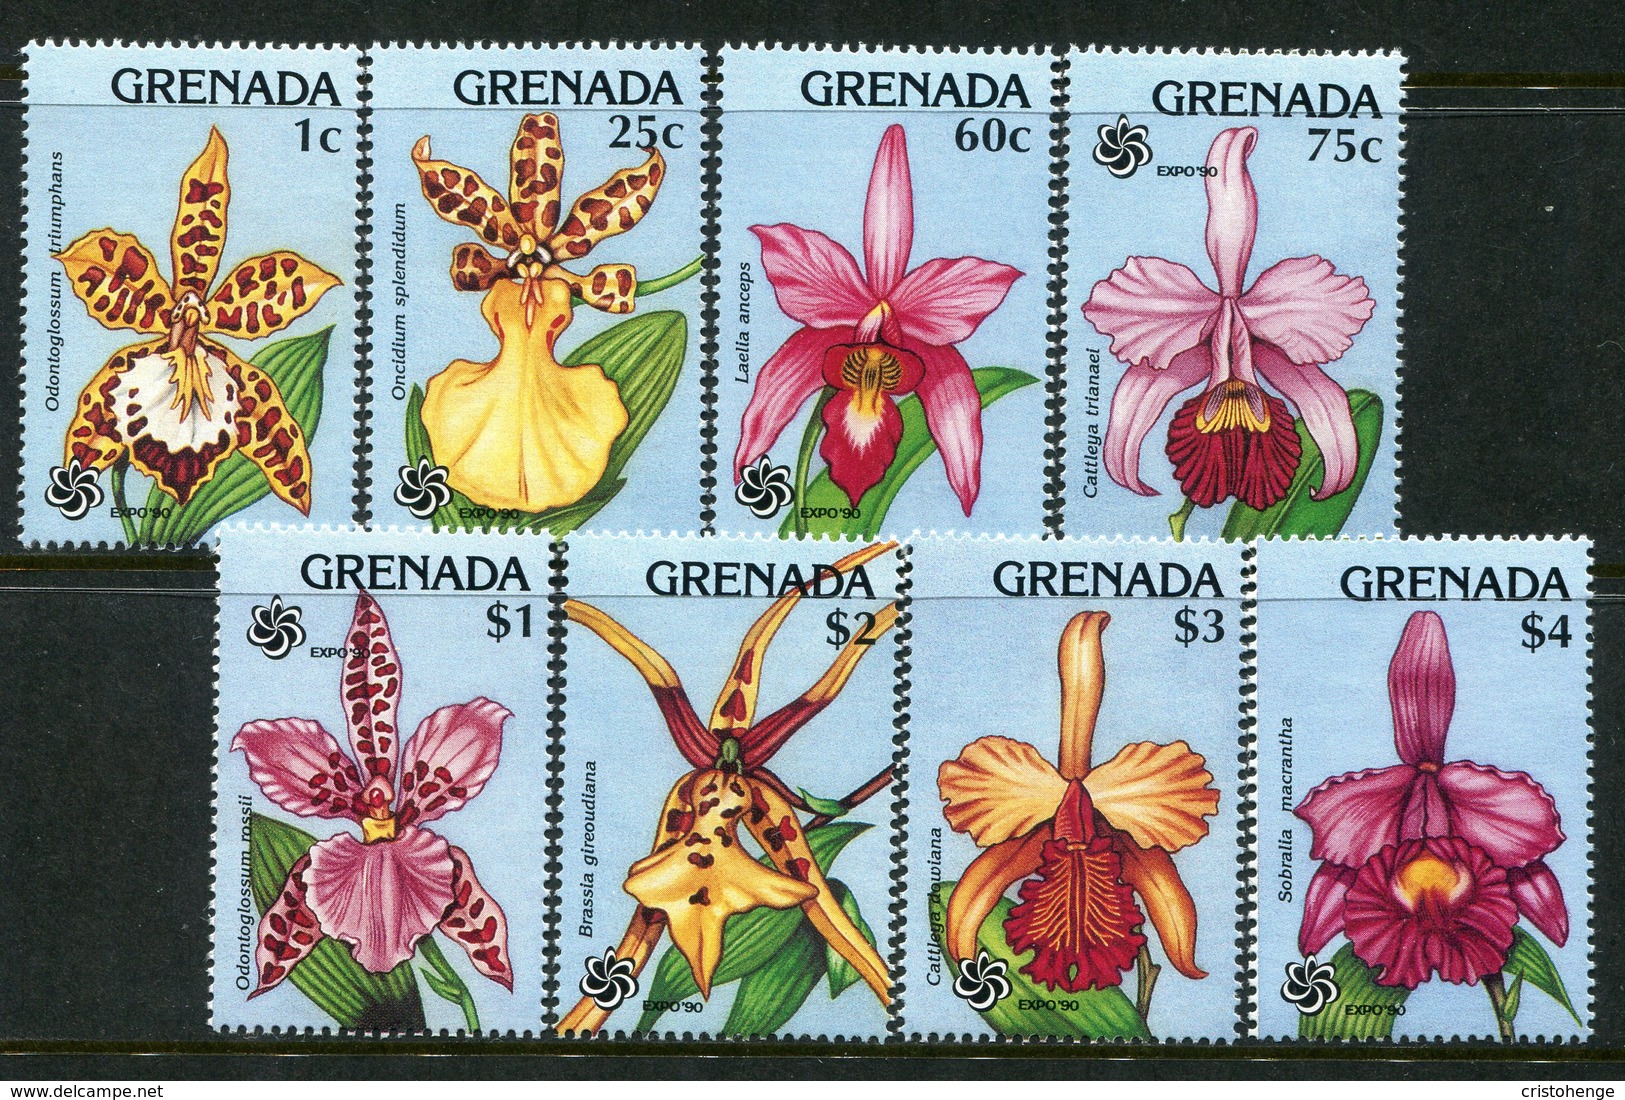 Grenada 1990 Expo '90 - Orchids Set MNH (SG 2082-2089) - Grenada (1974-...)